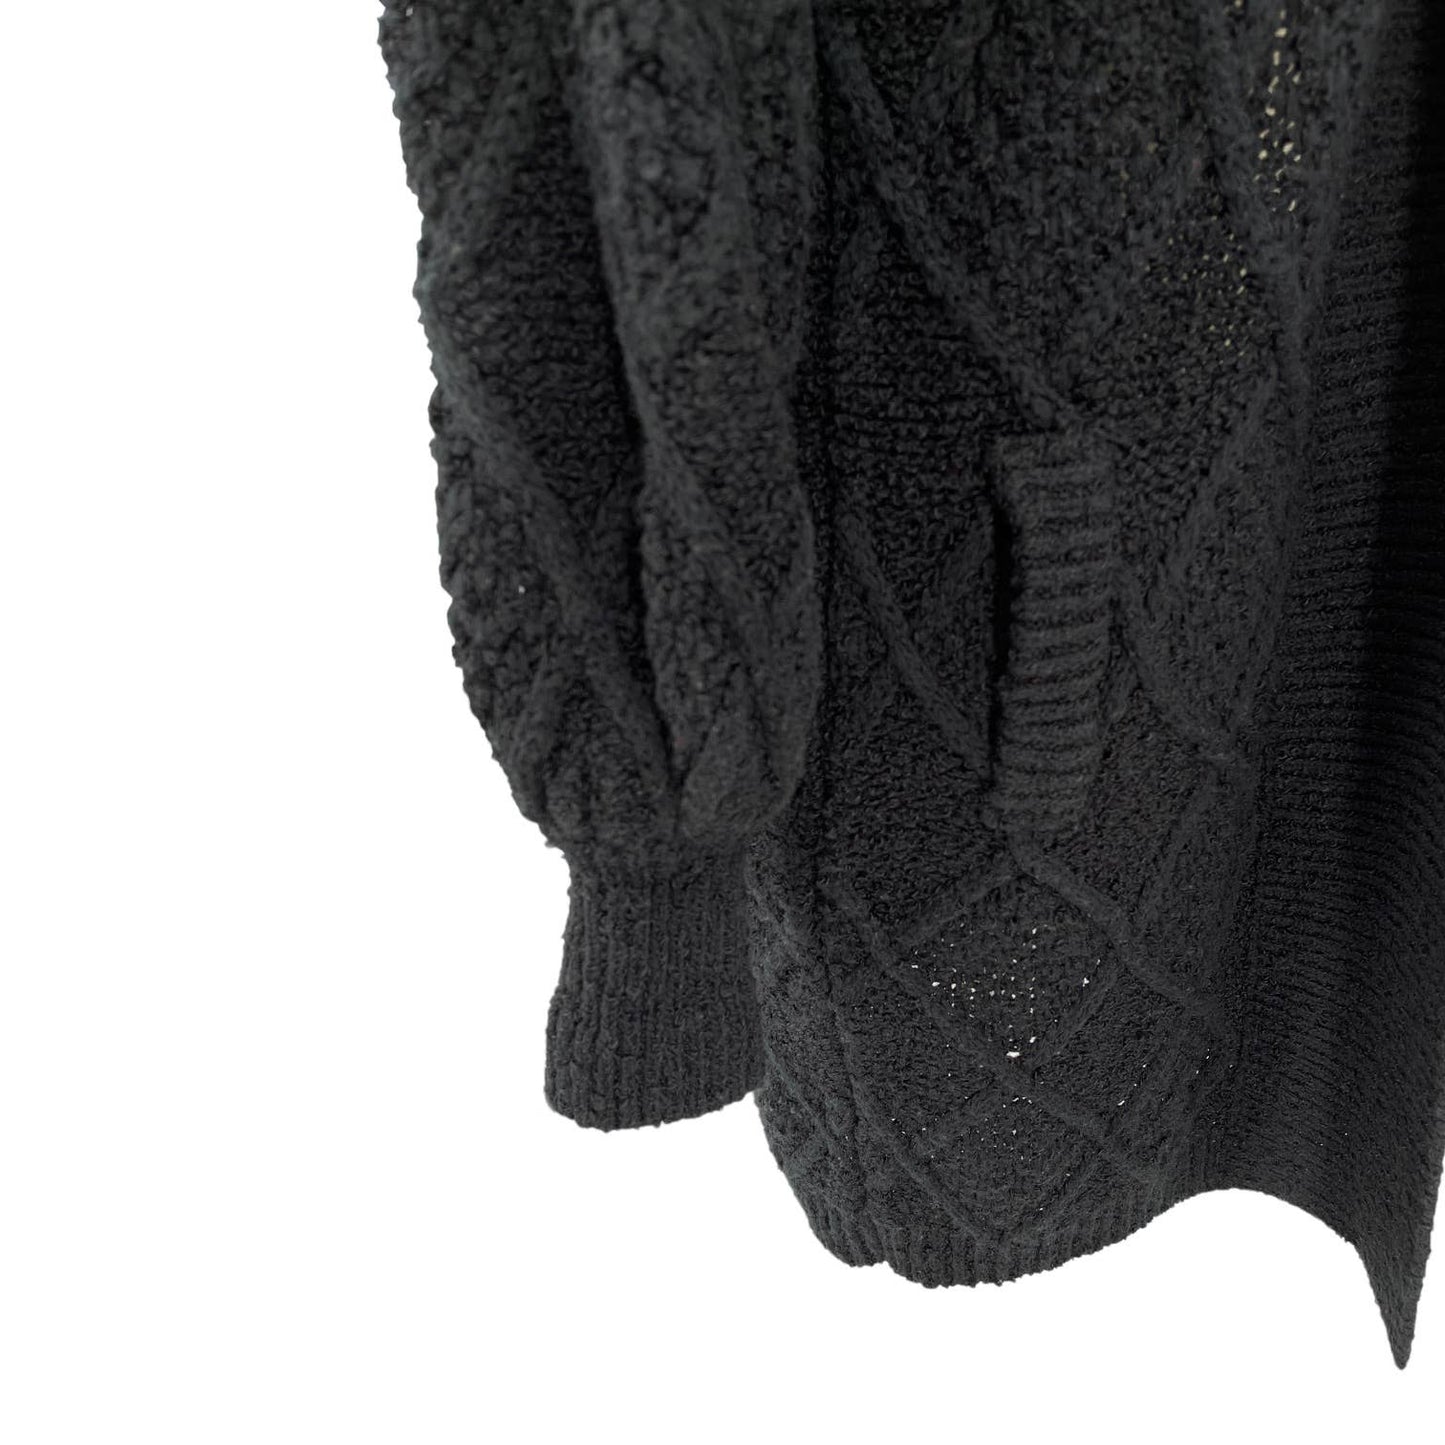 Vintage 80s Black Cardigan Sweater Textured Diamond Pattern Yarn Works Size S